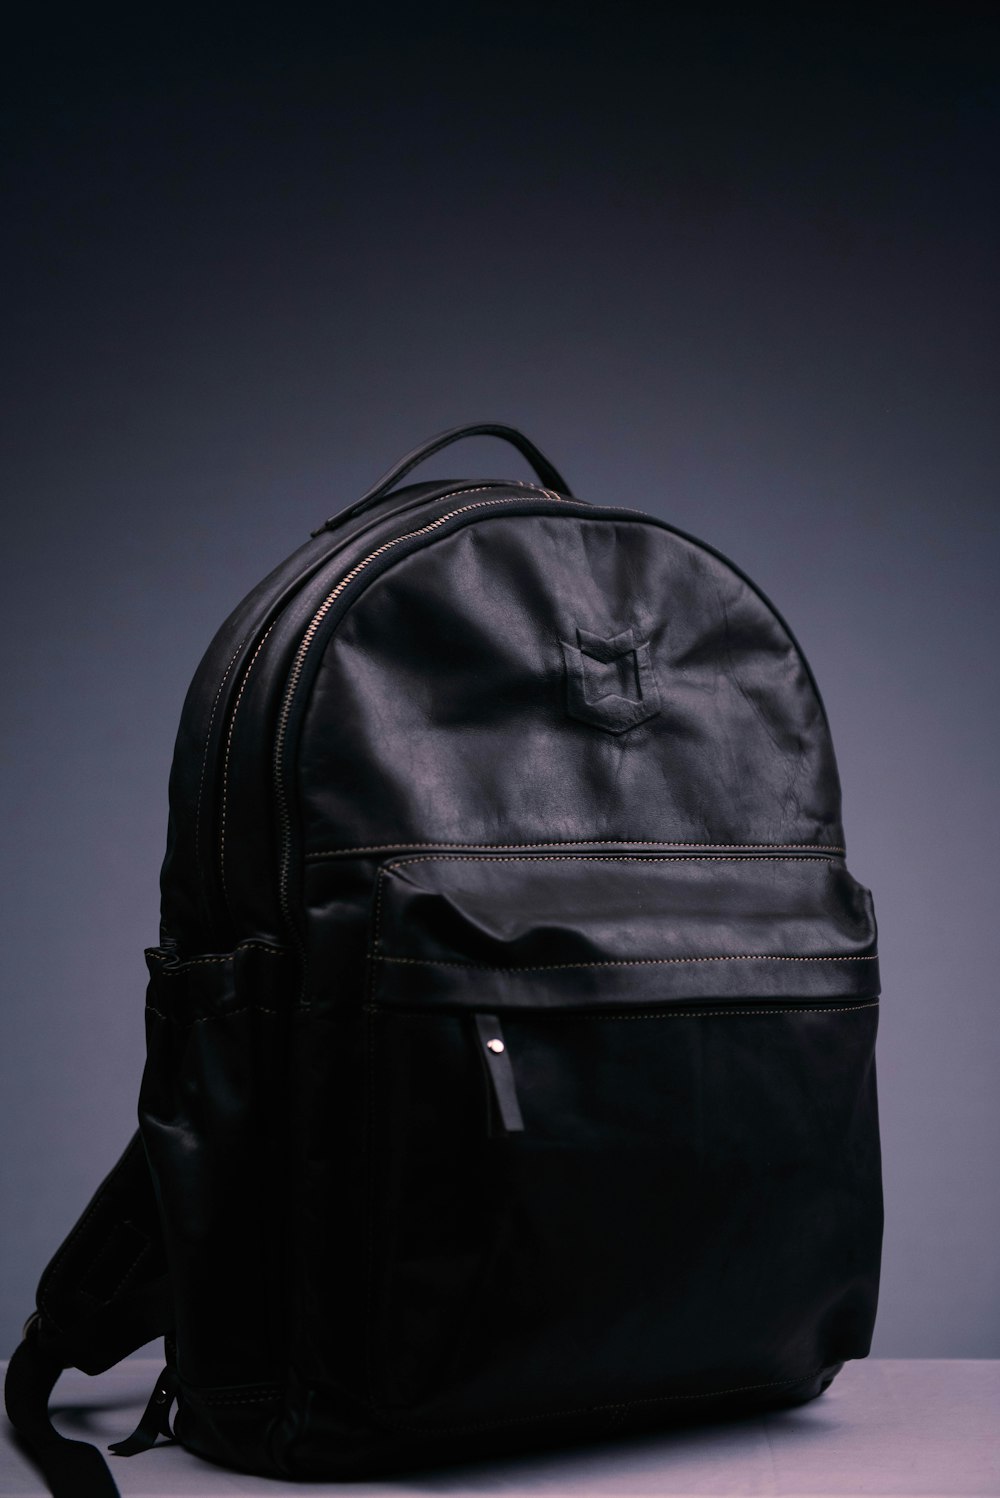 black nike backpack on purple surface